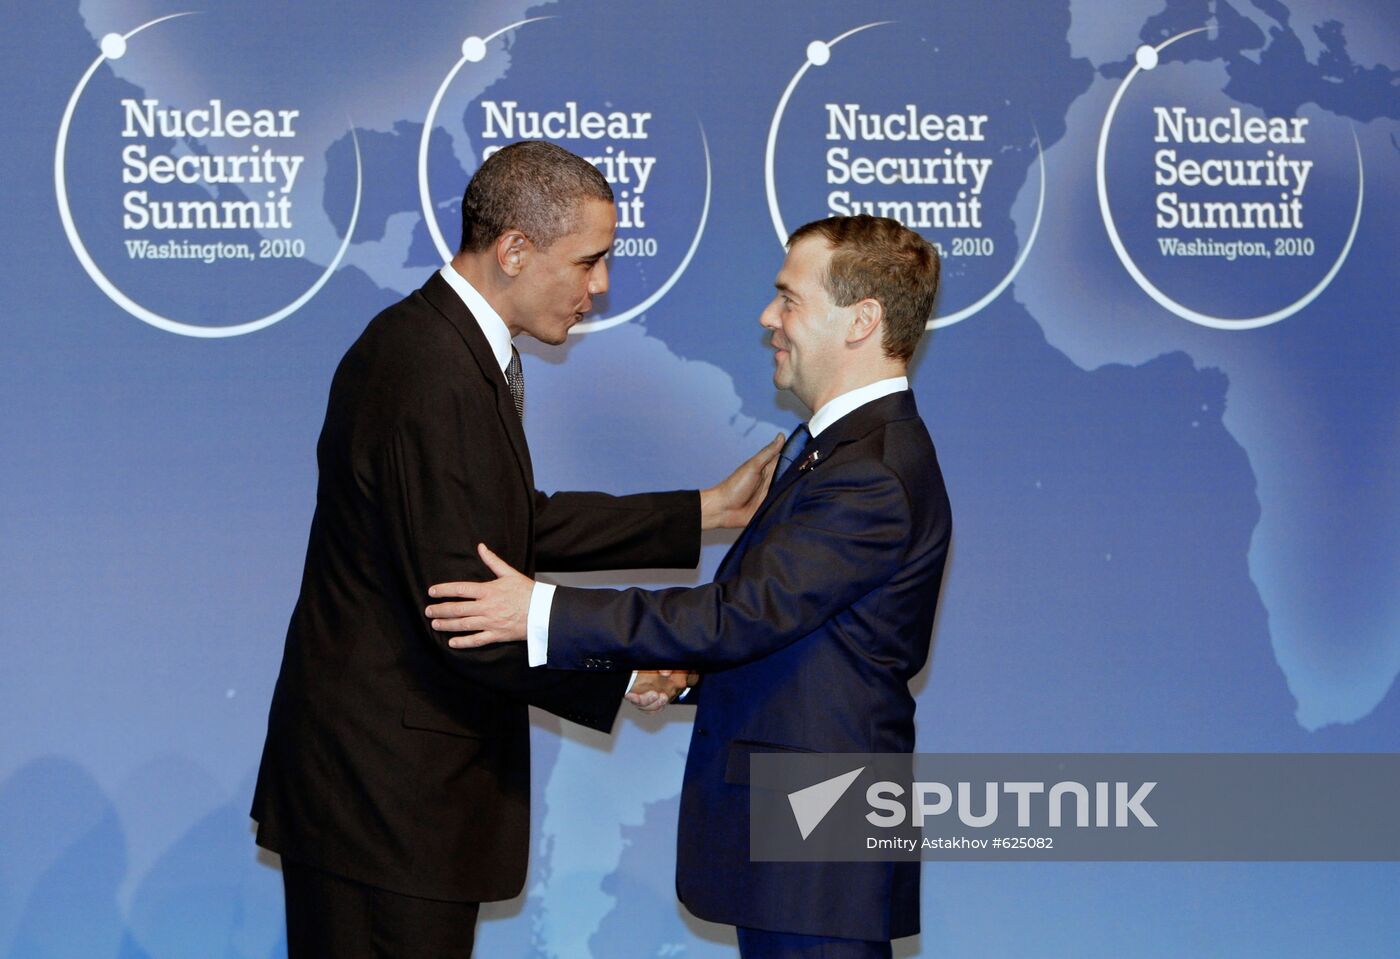 Global Nuclear Security Summit in Washington, DC